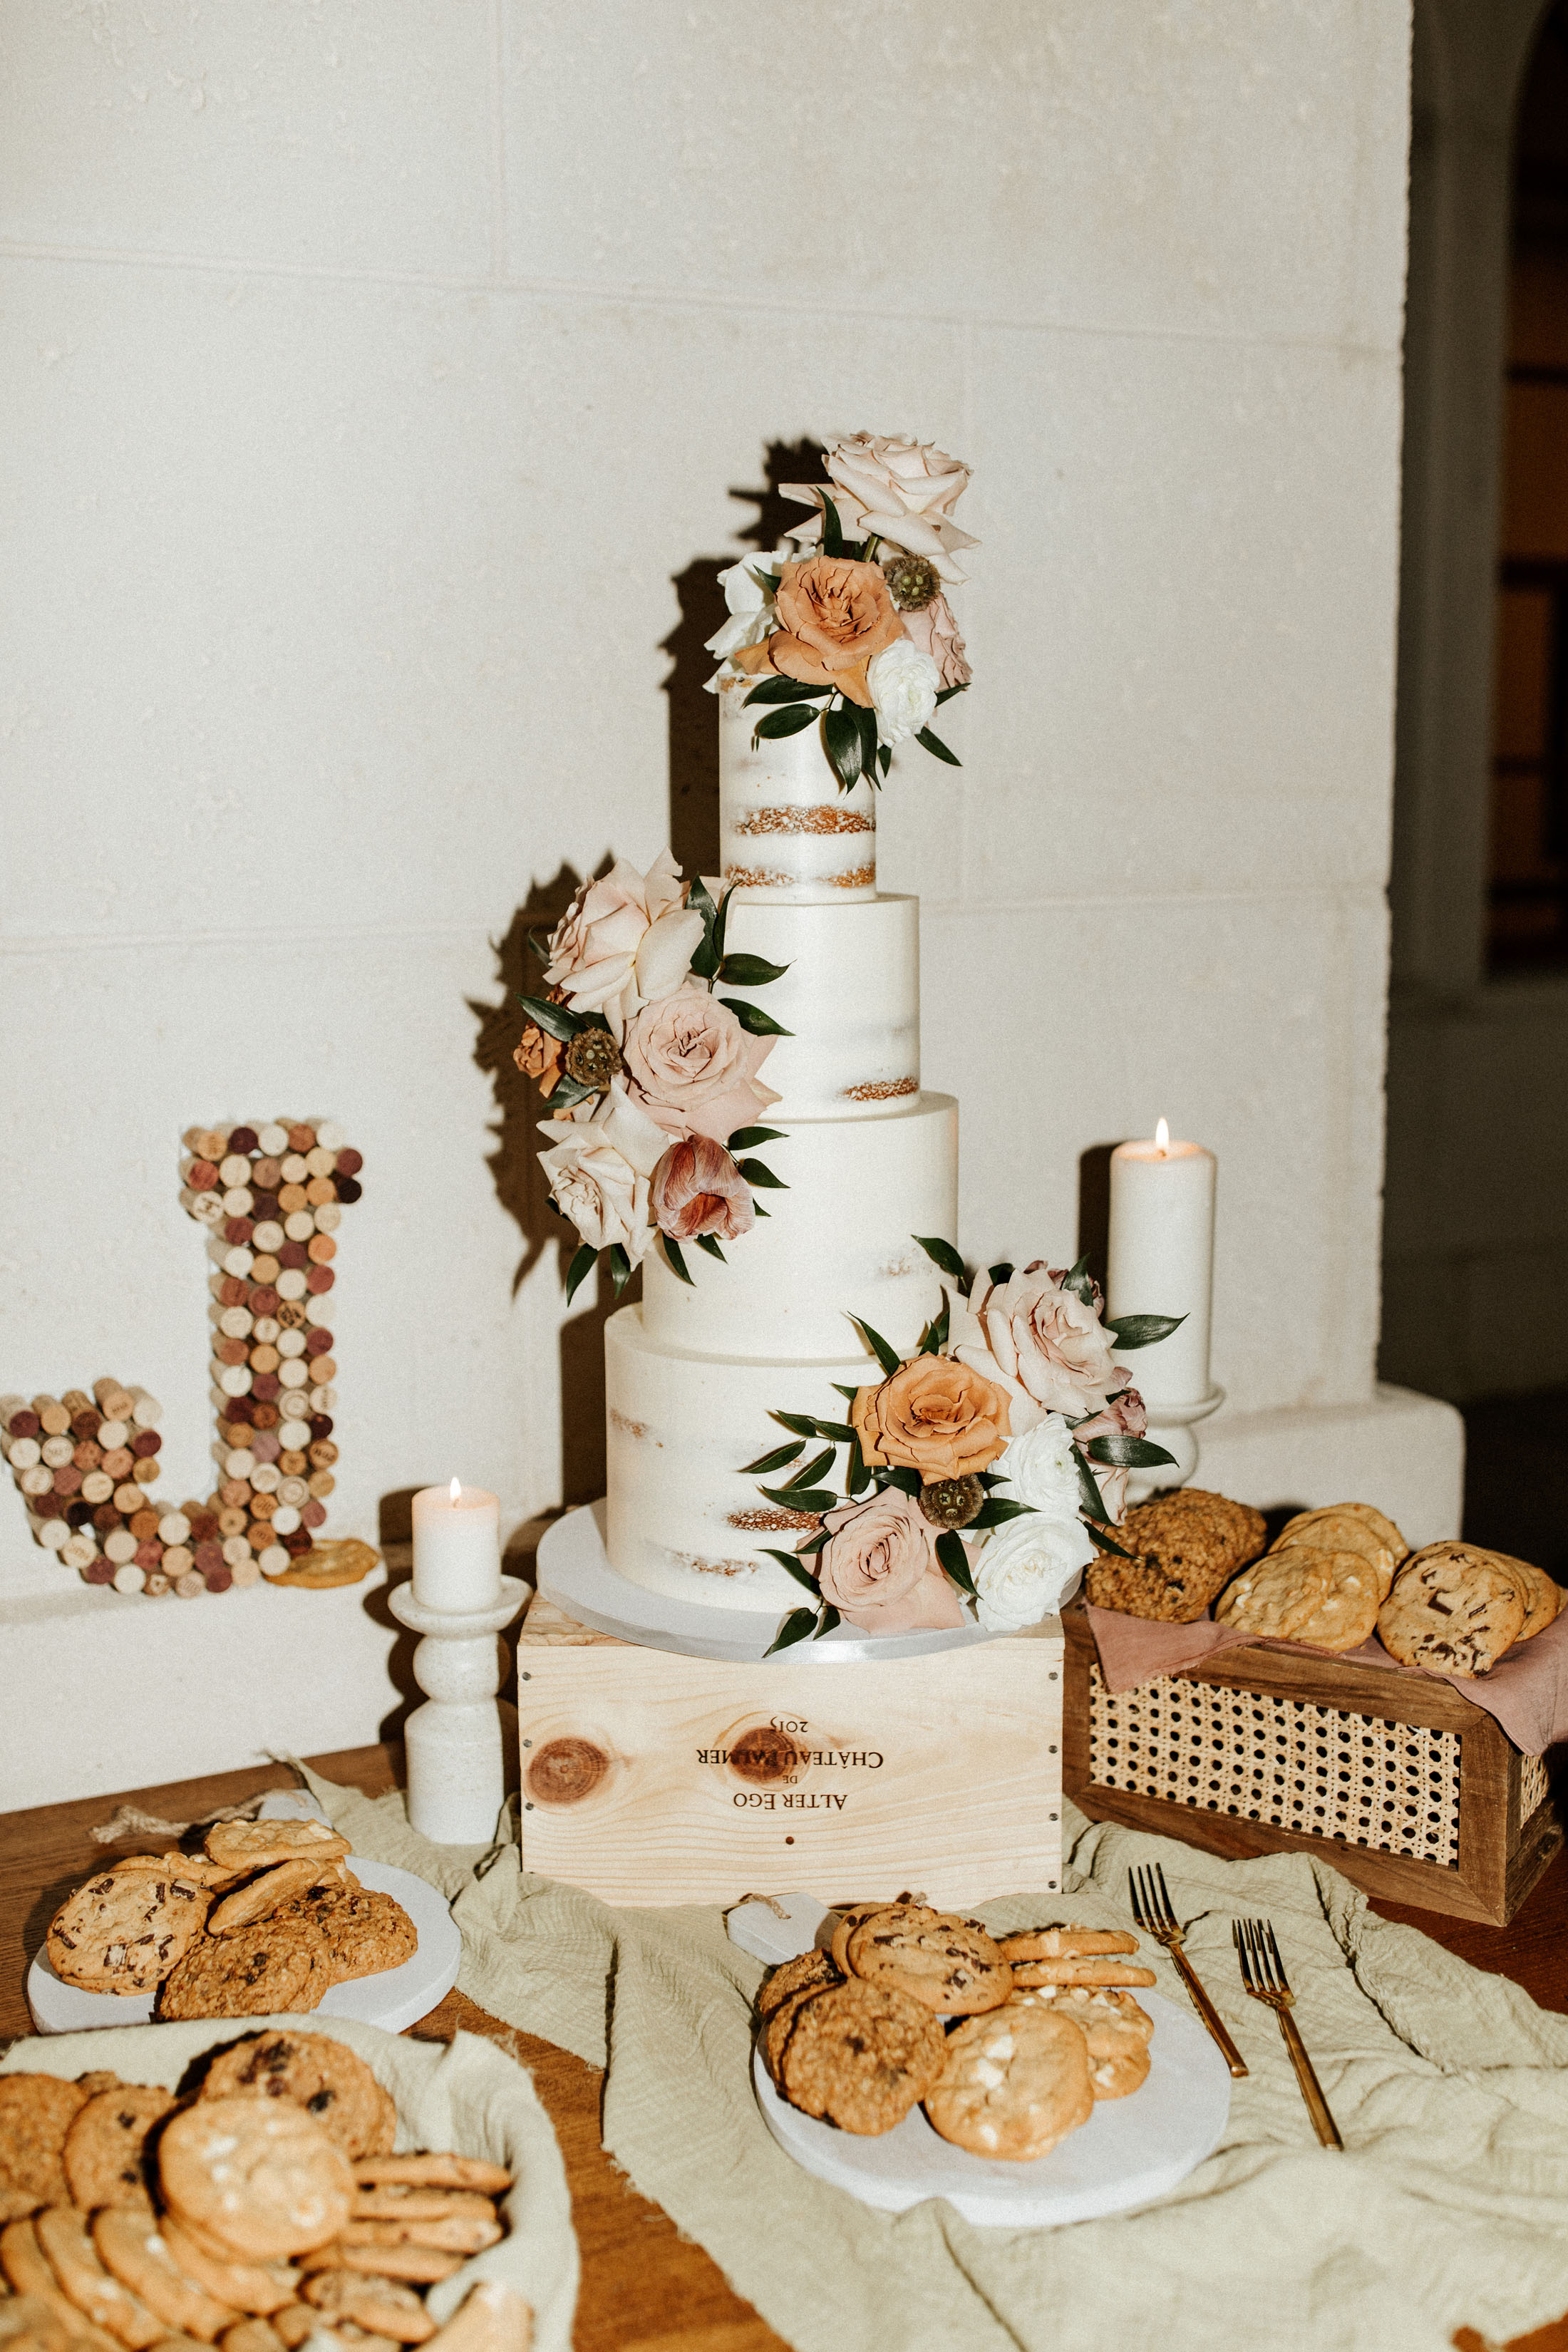  Naked wedding cake with flowers